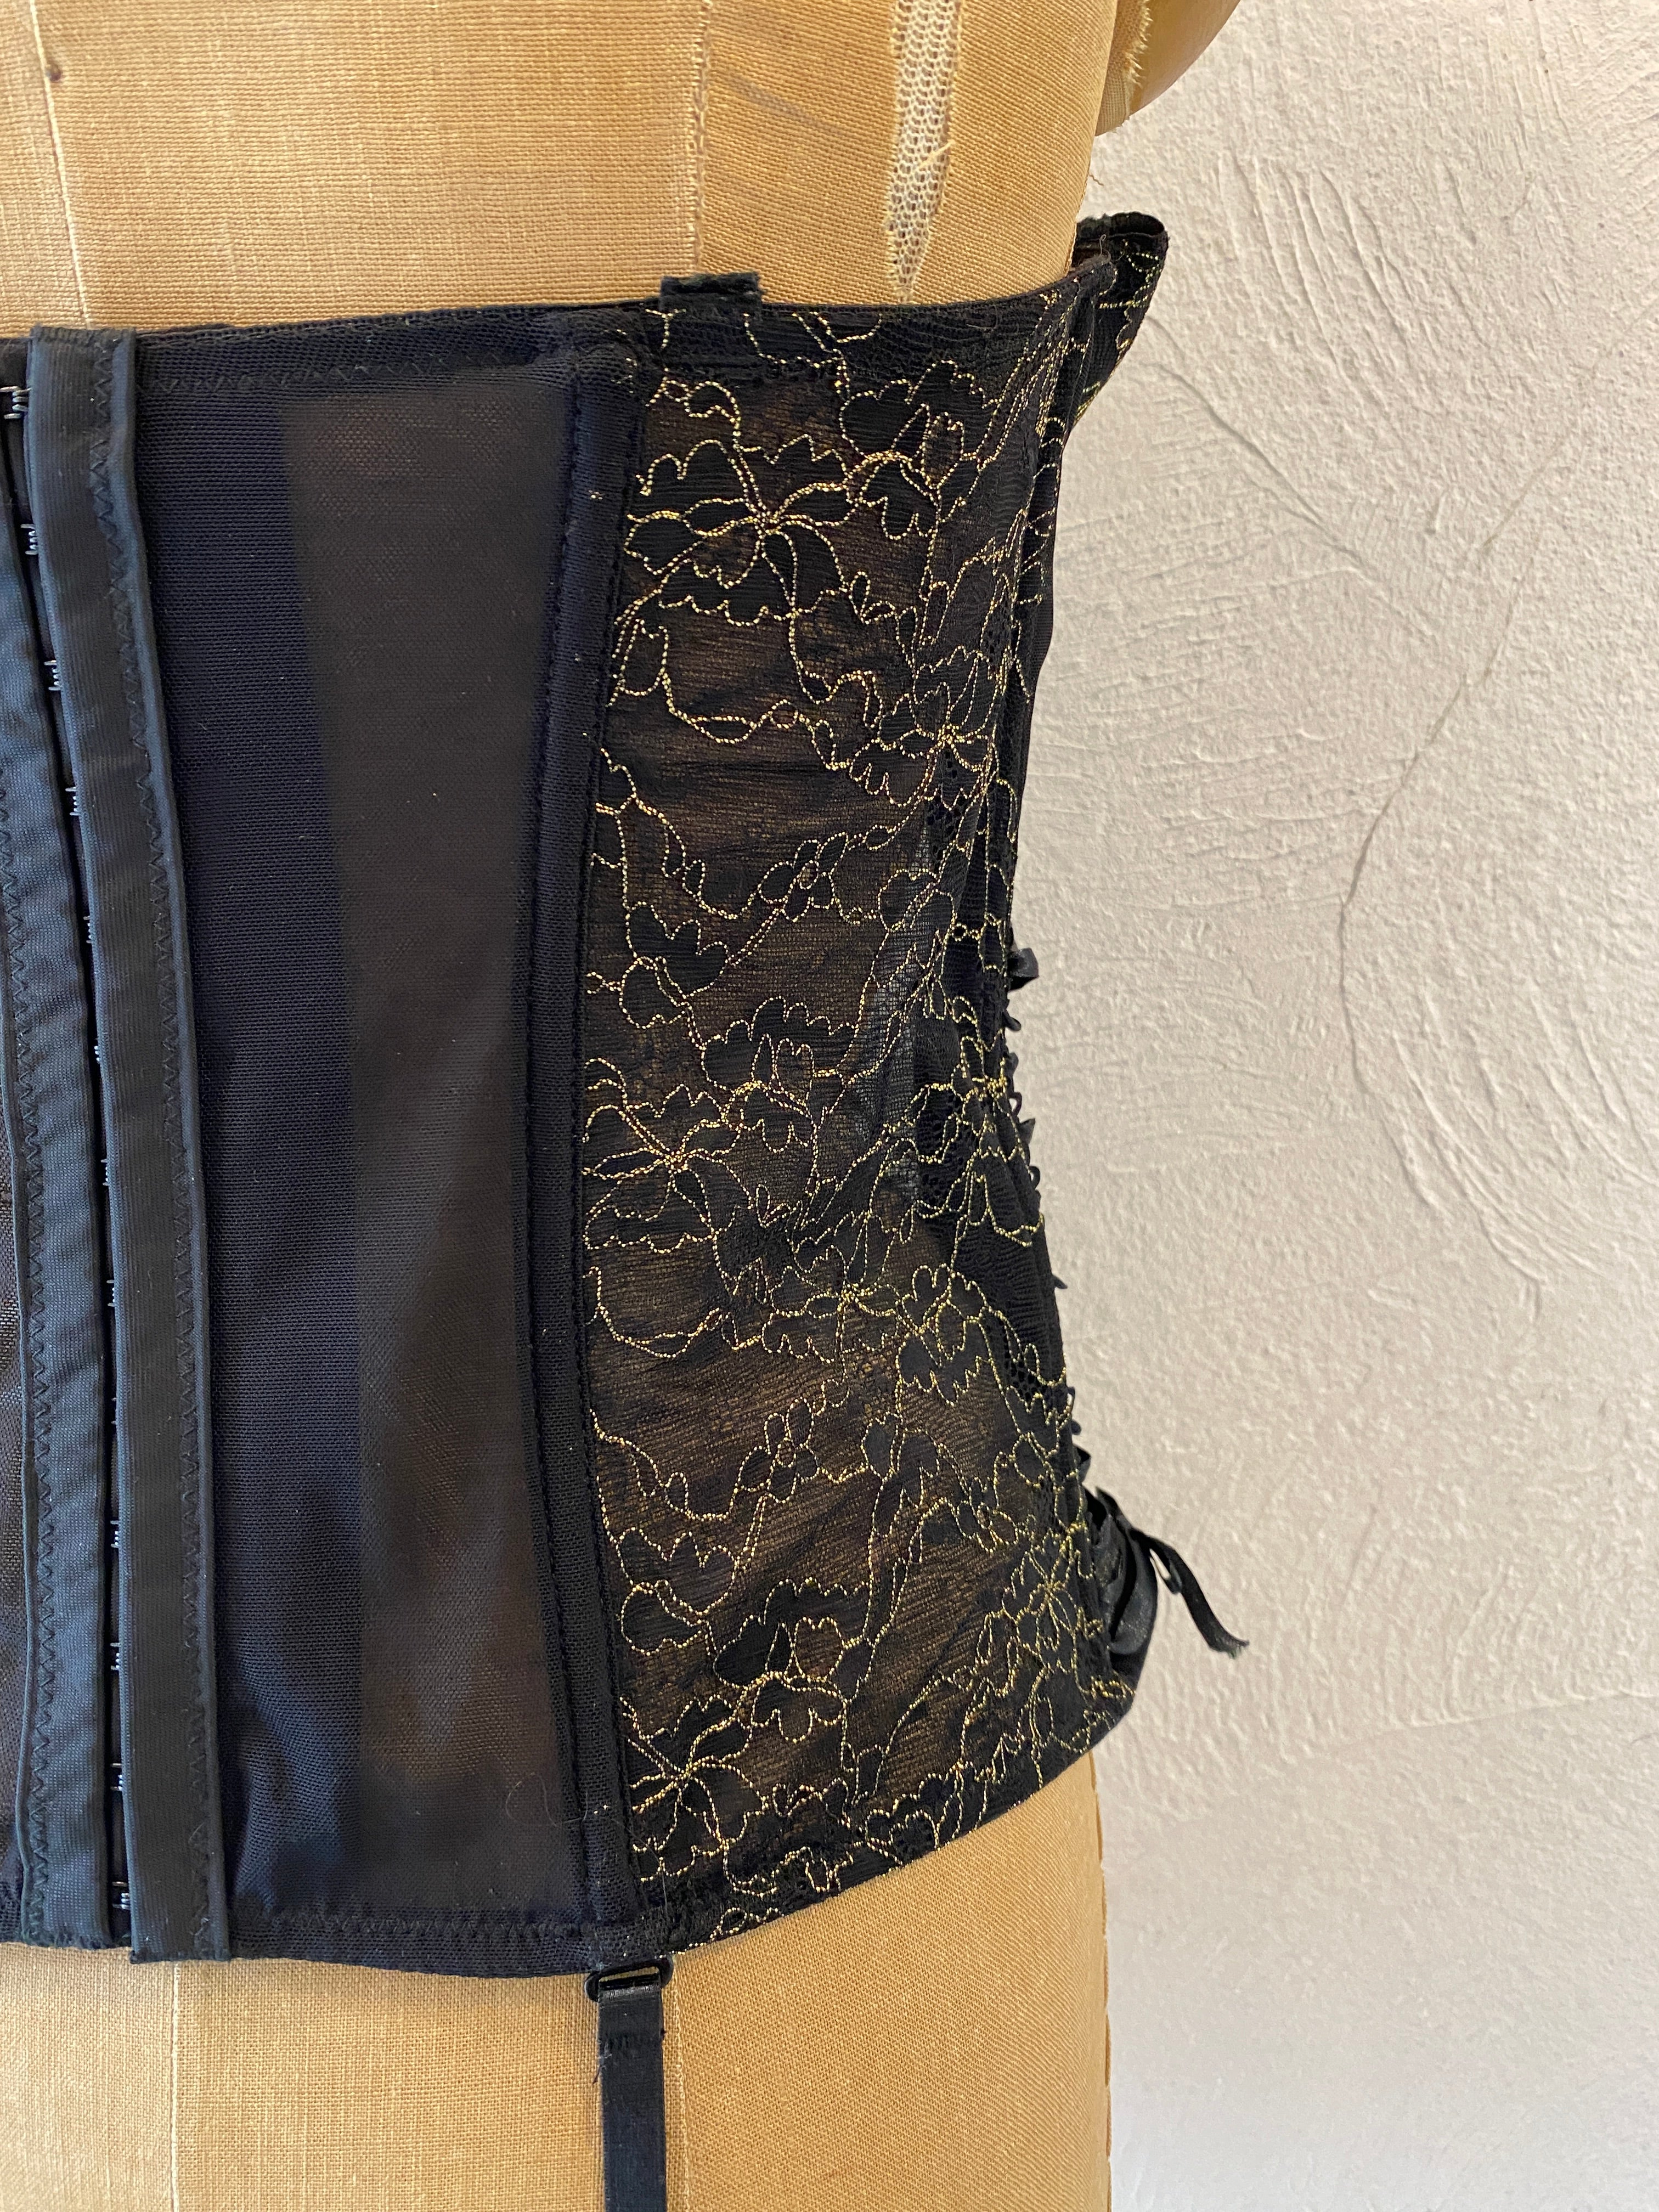 black gold corset